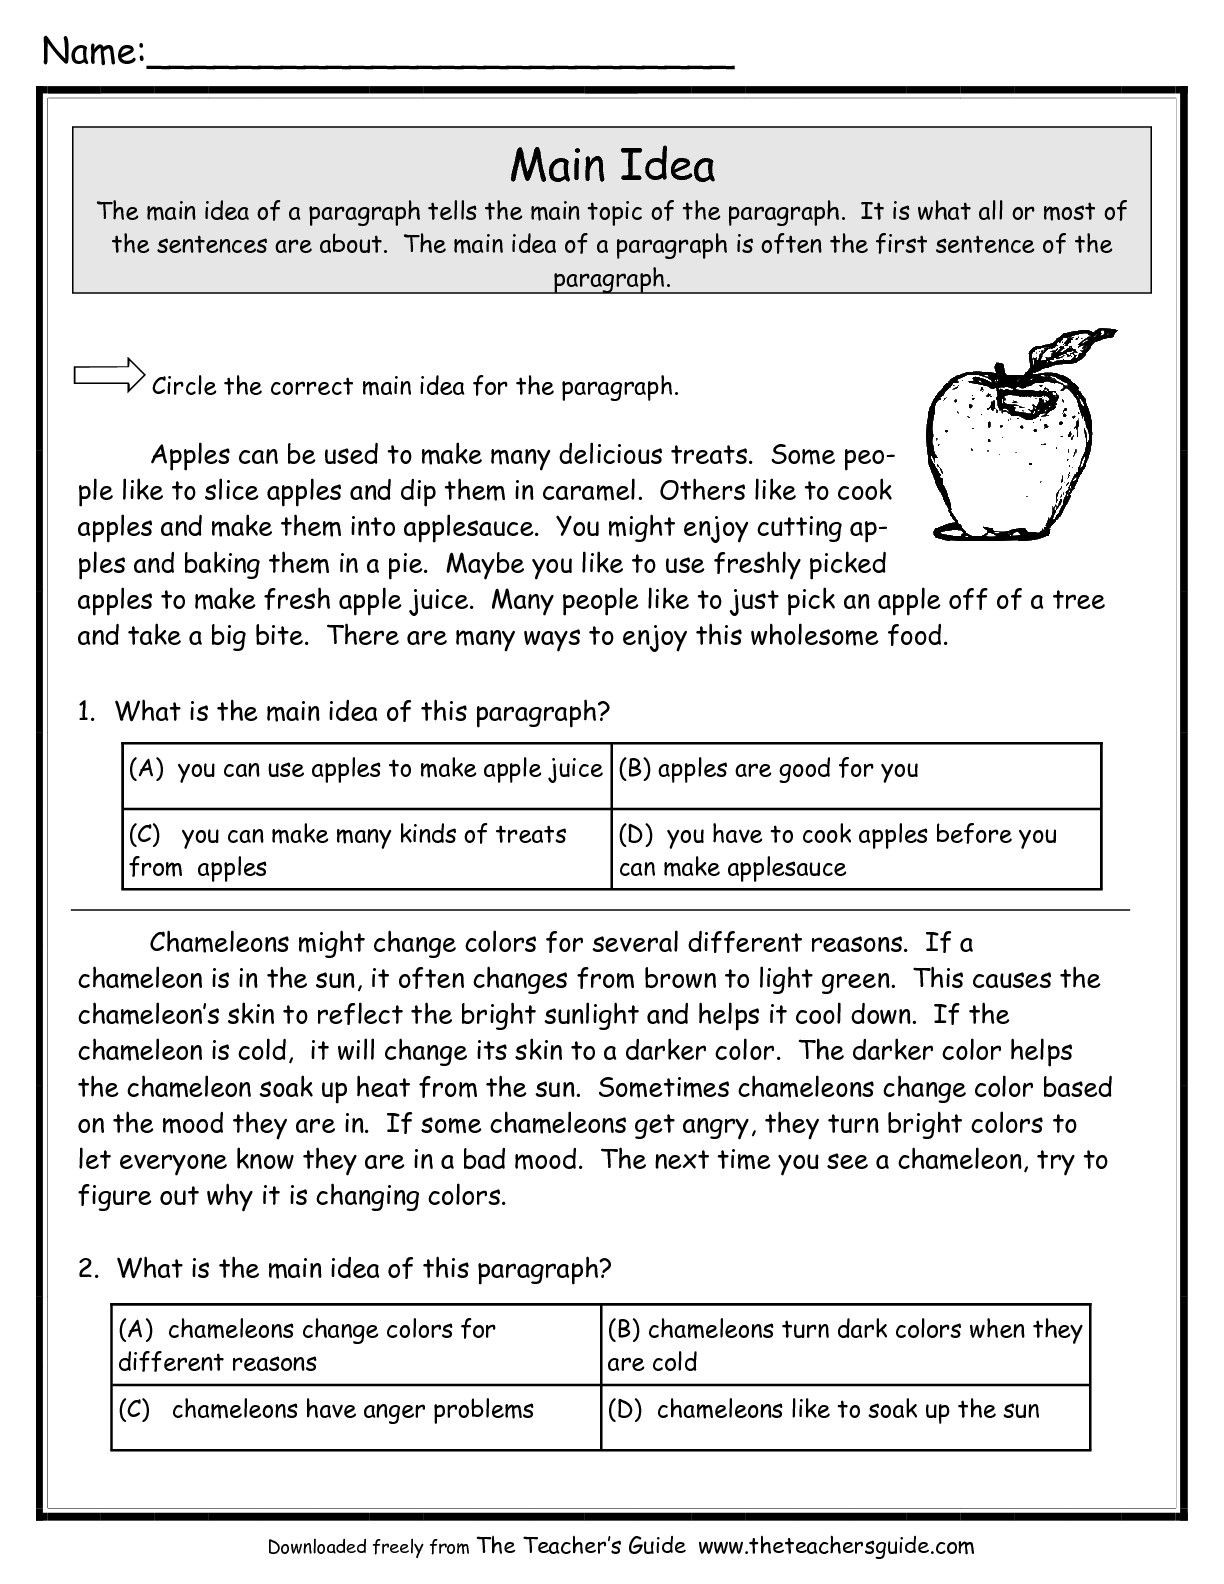 Main Idea Worksheet 4th Grade Main Idea Worksheets From the Teacher S